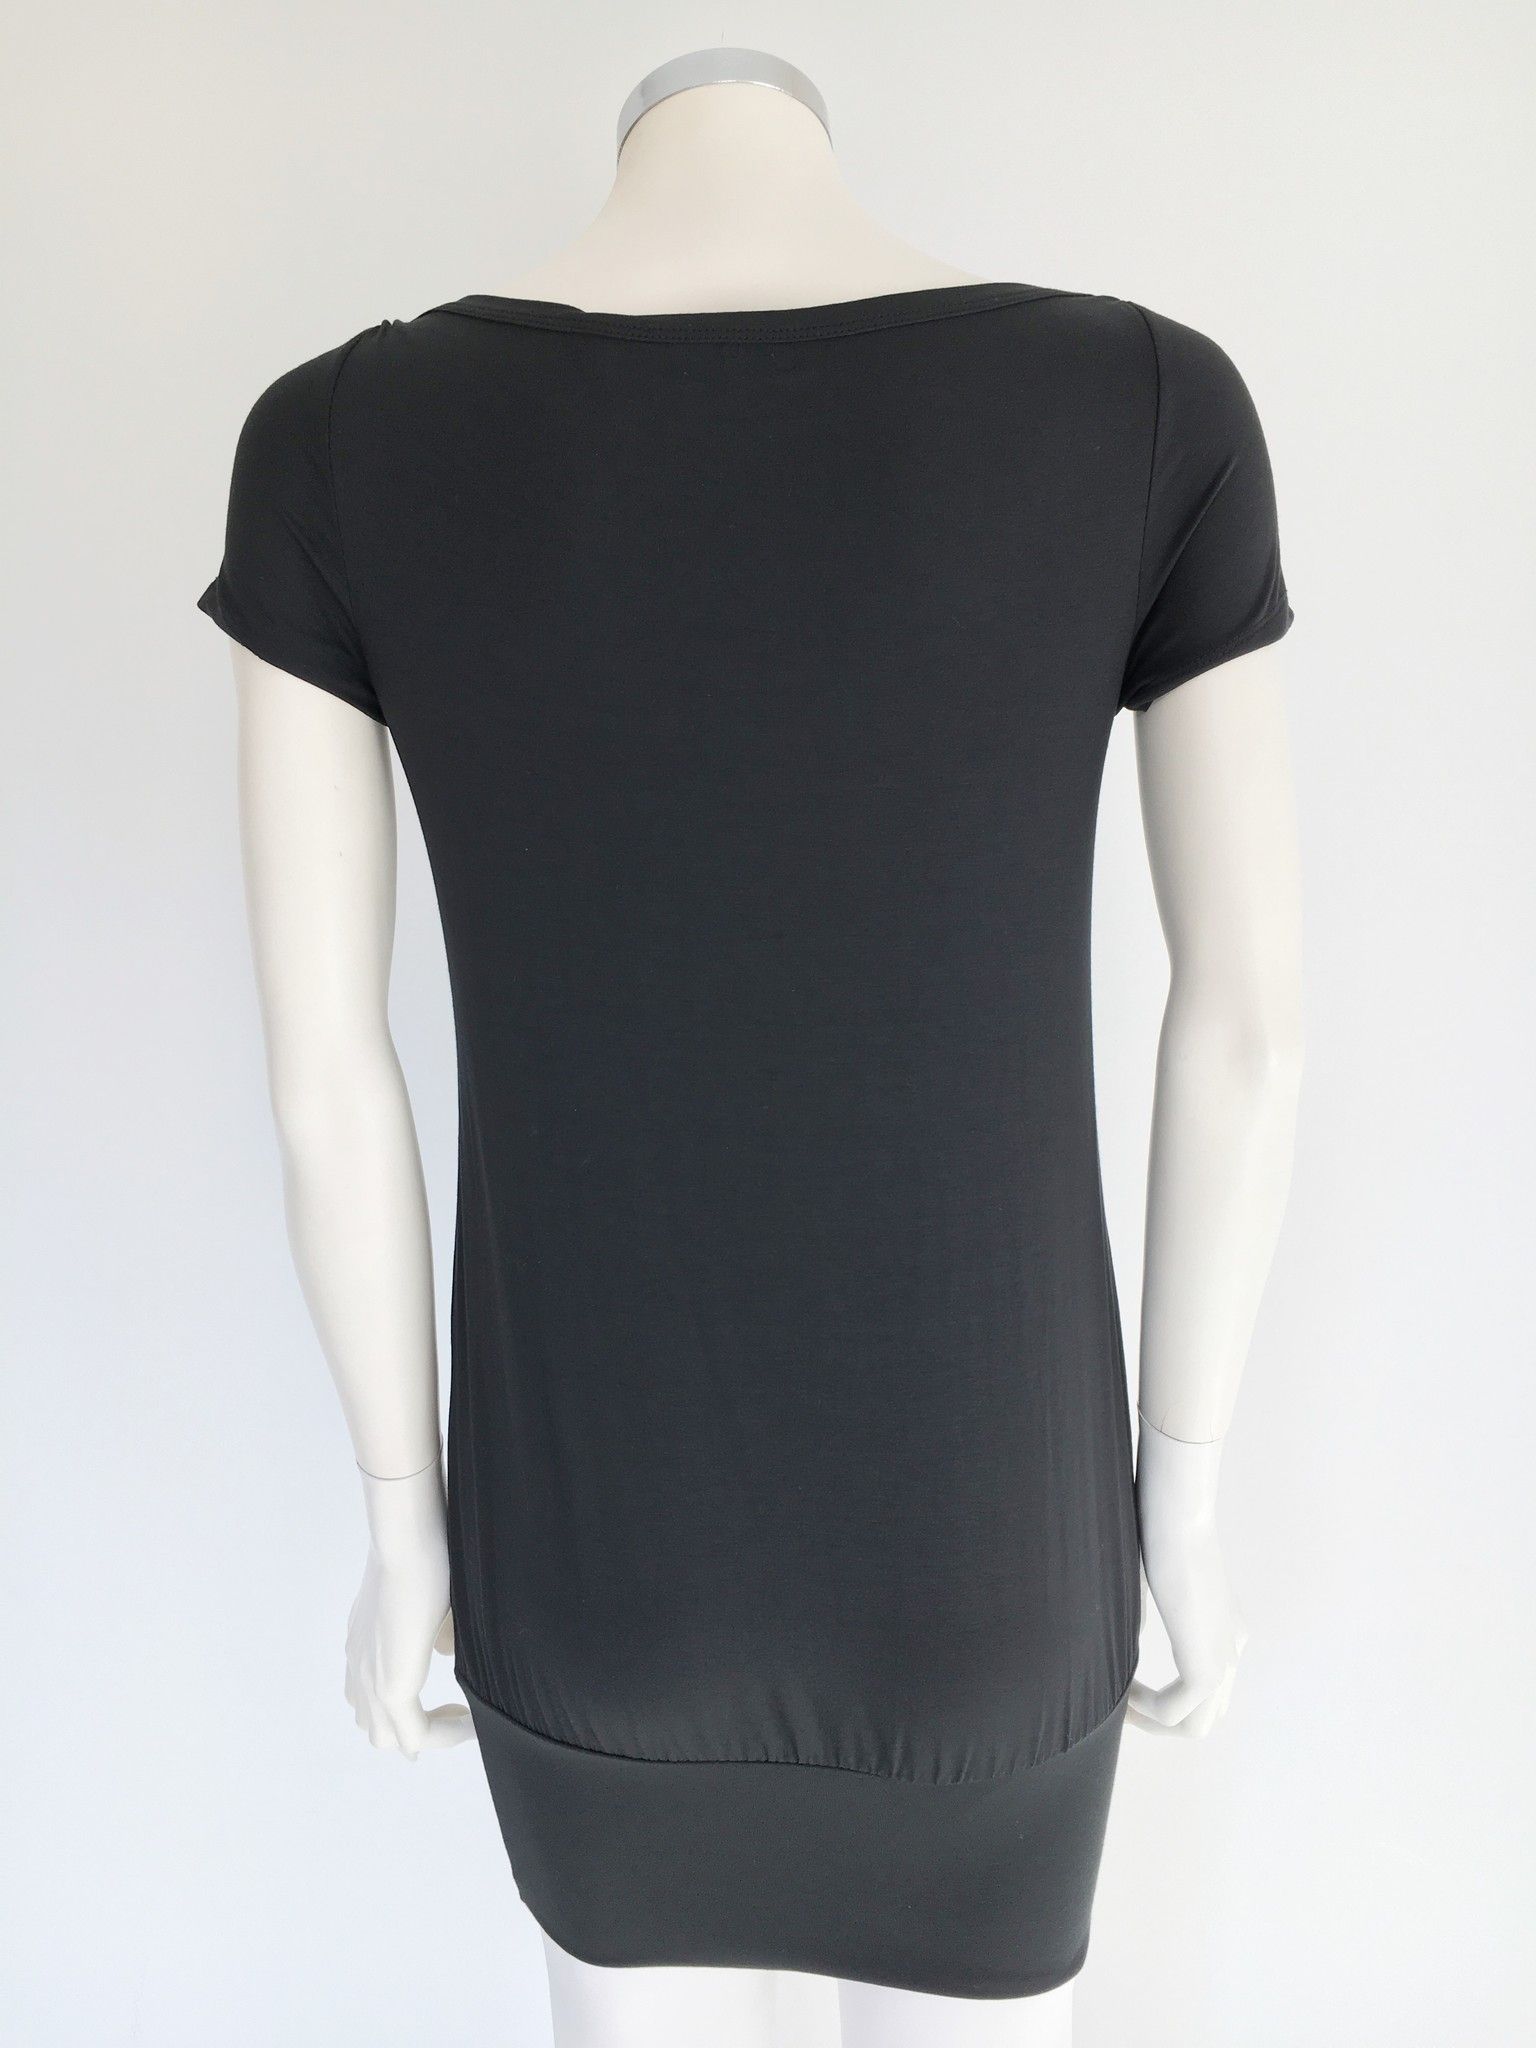 T-Shirt LadyBug Lunga "Black Stage" Cod.0325